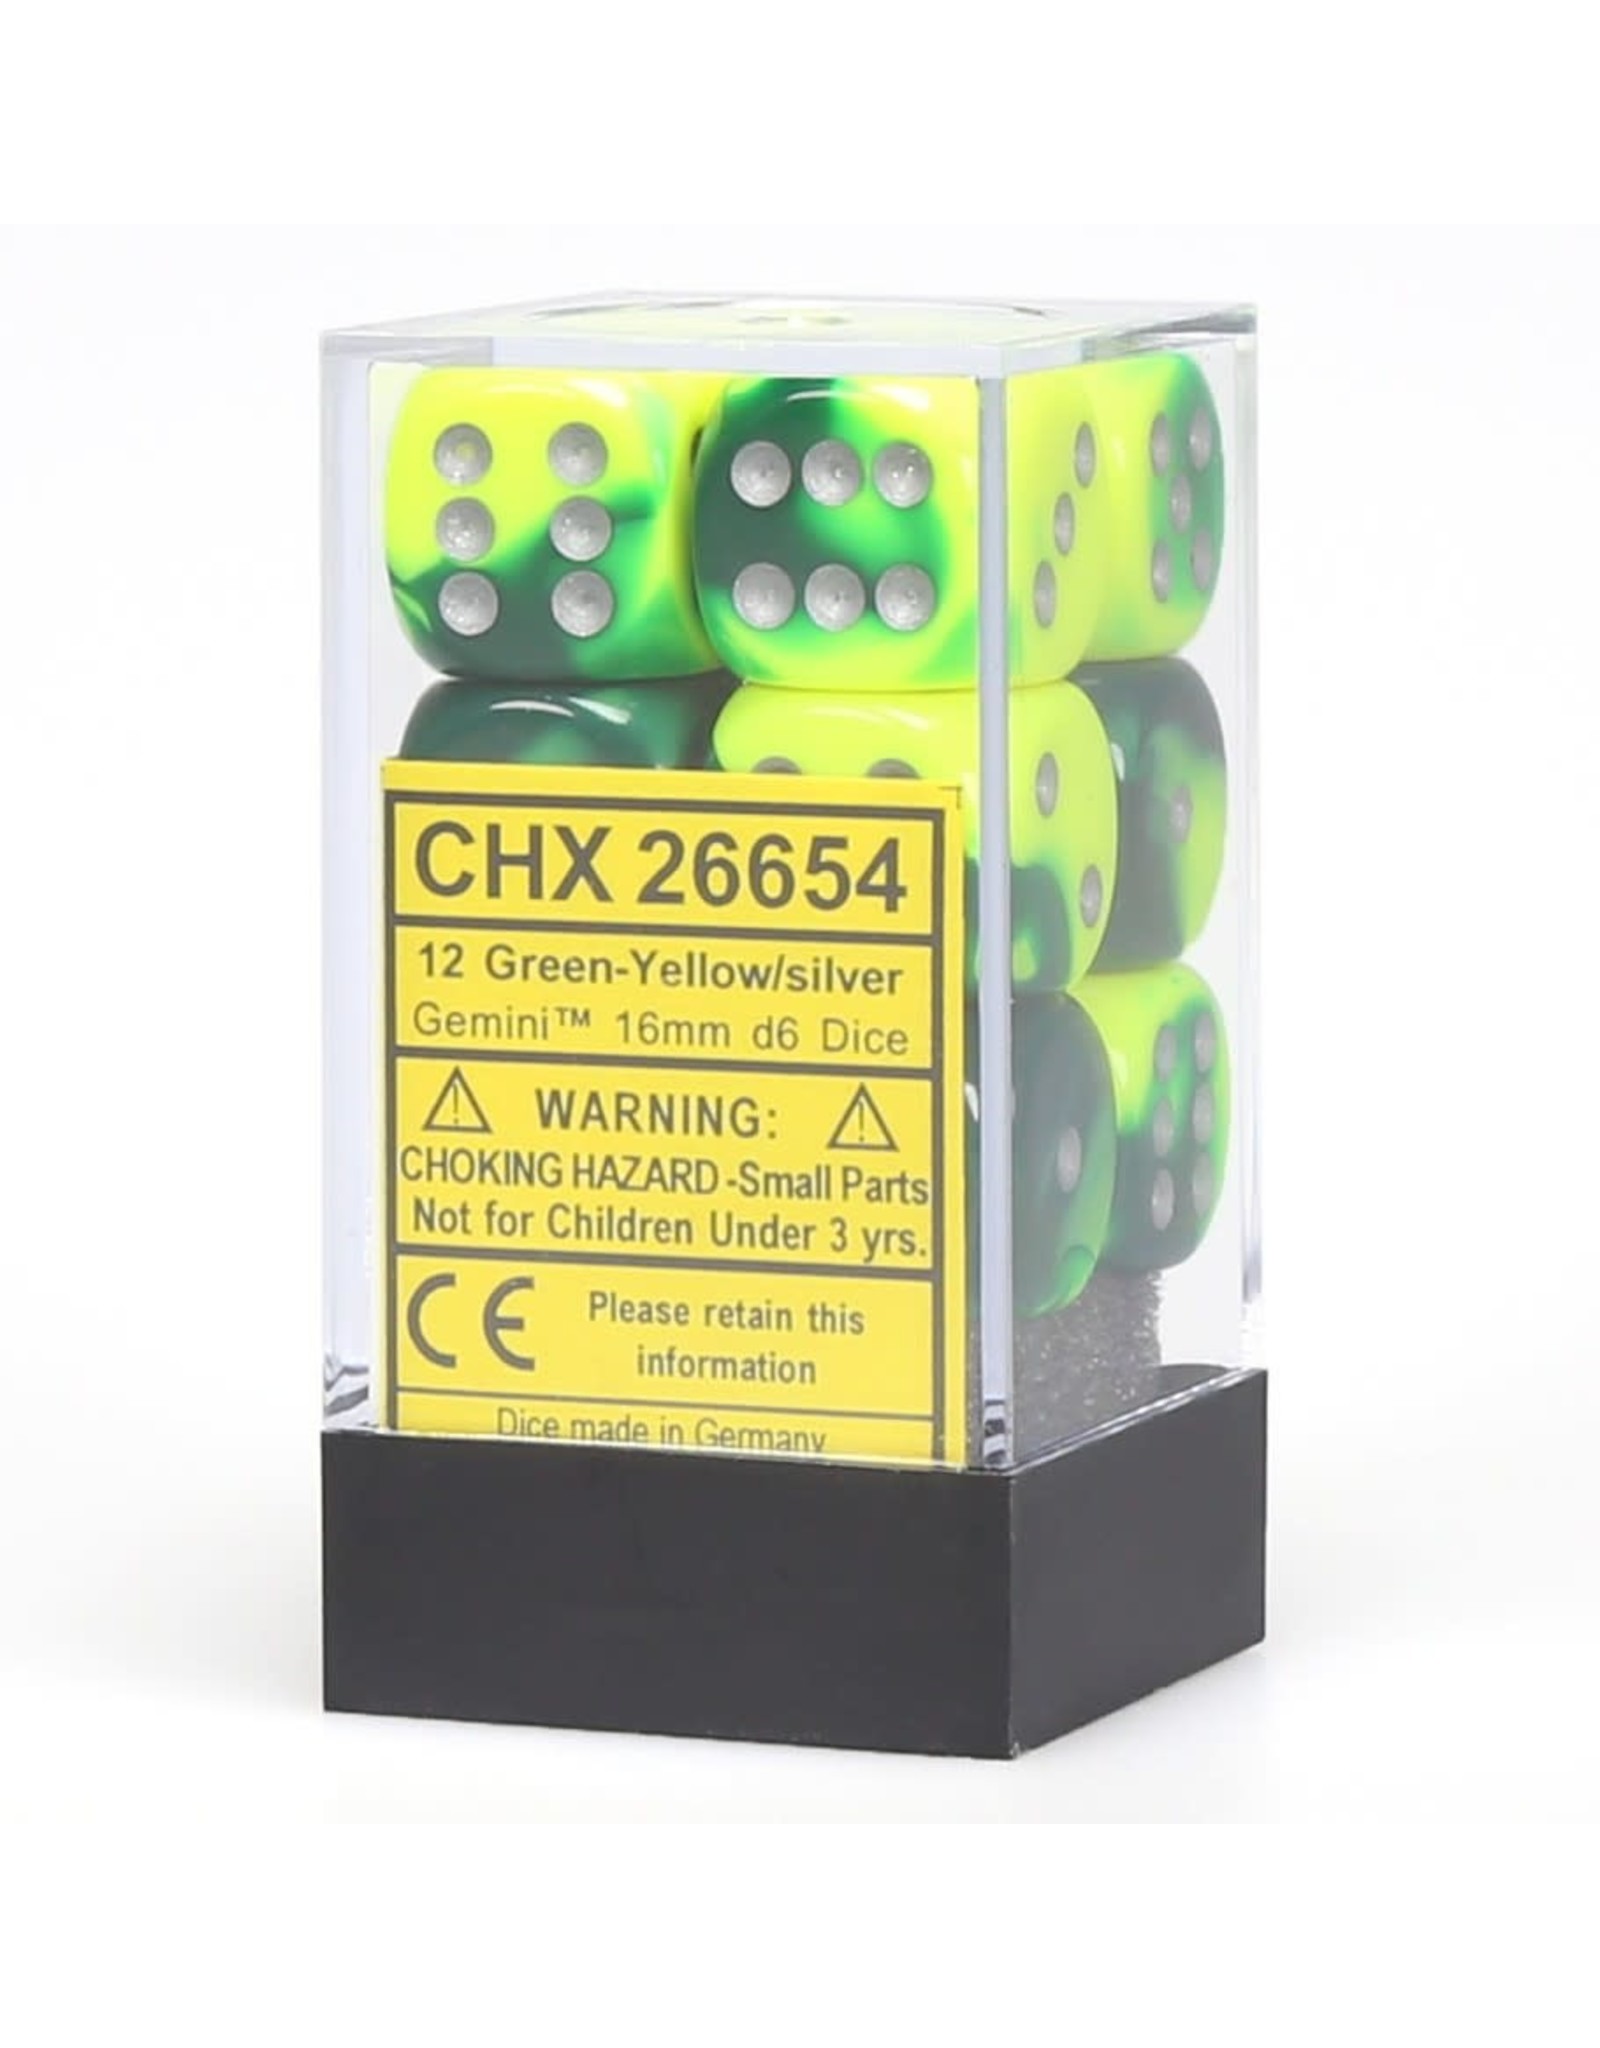 Chessex Gemini 16mm d6 Black - Yellow/silver Dice Block (12 Dice Set)